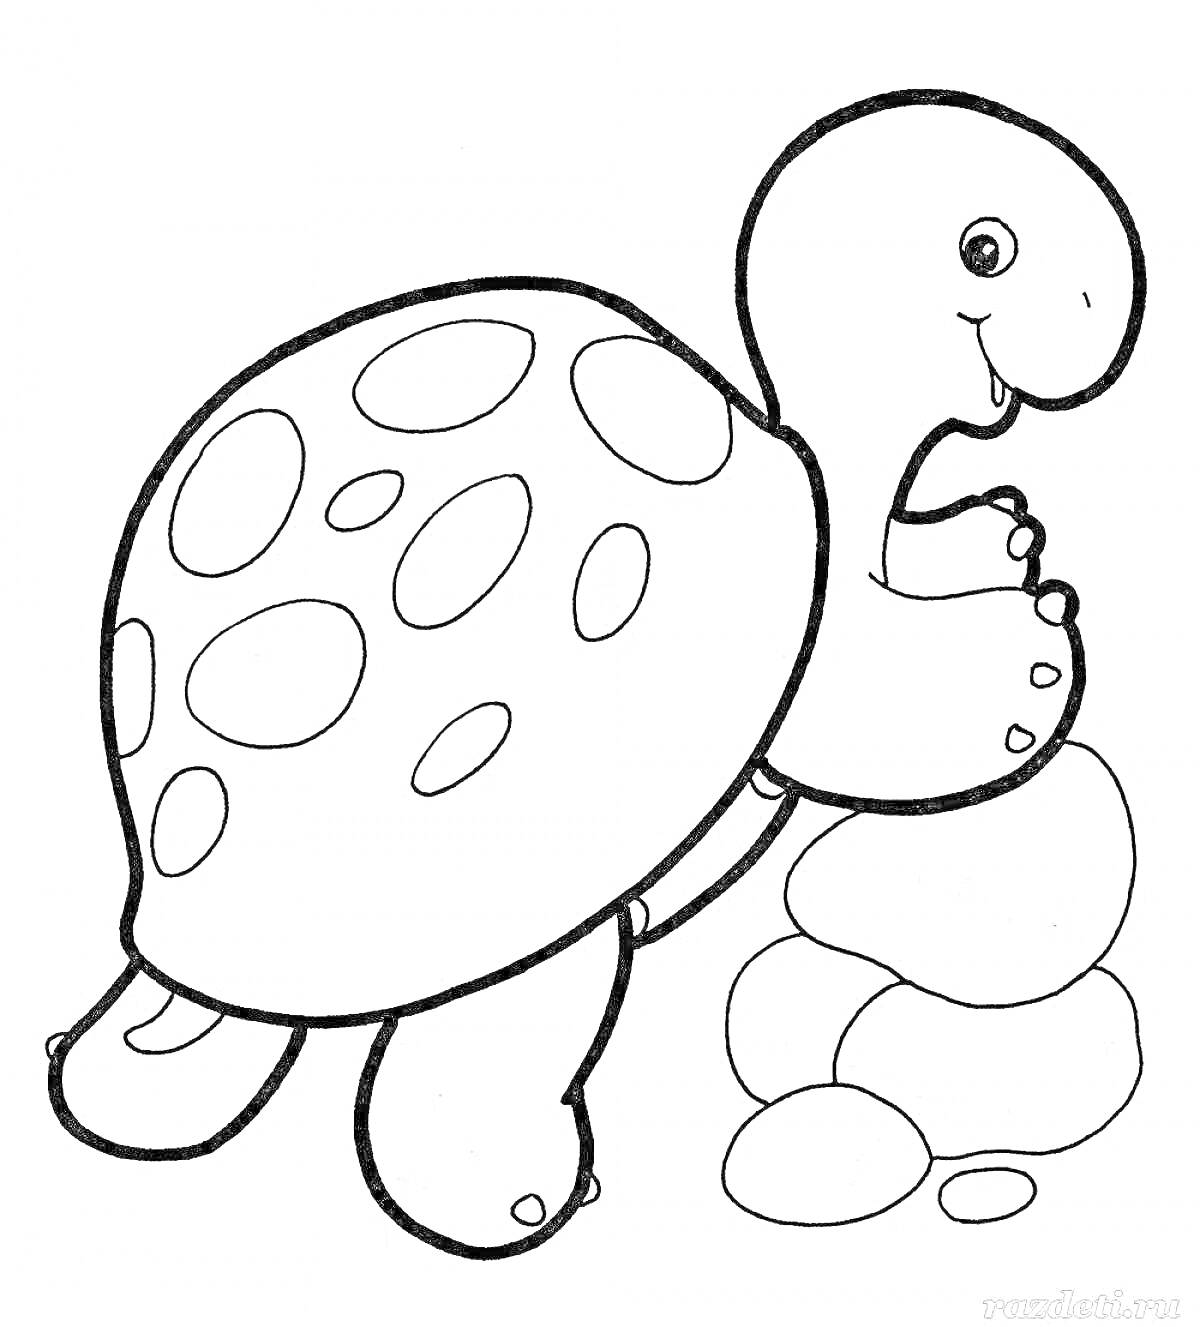 Раскраска Черепаха с пятнистыми панцирем на фоне камней